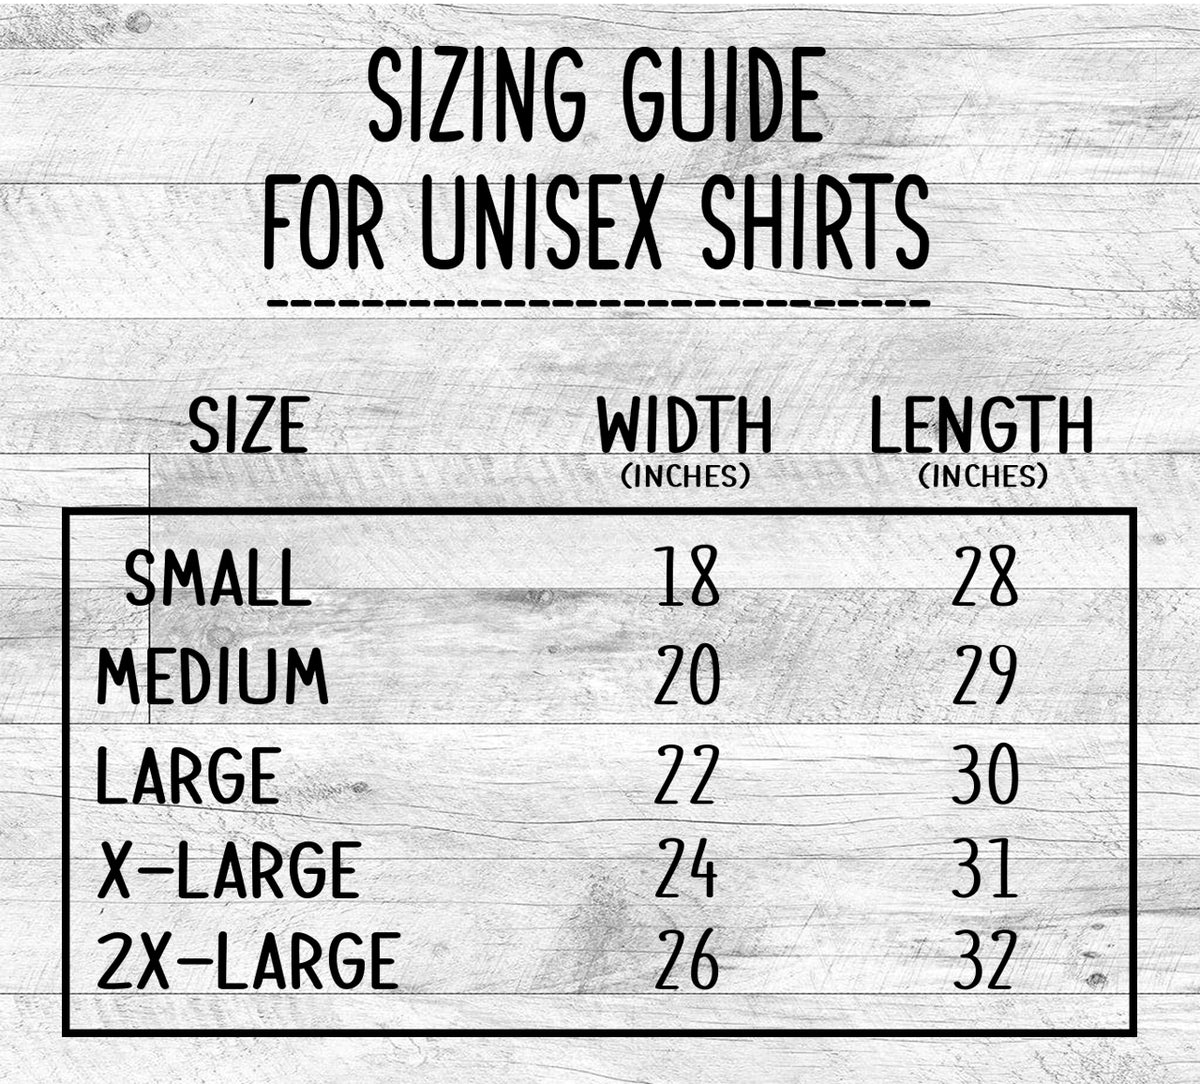 Gigi Noun - Unisex T-shirt - Gigi Shirt - Gift Fo Gigi - familyteeprints